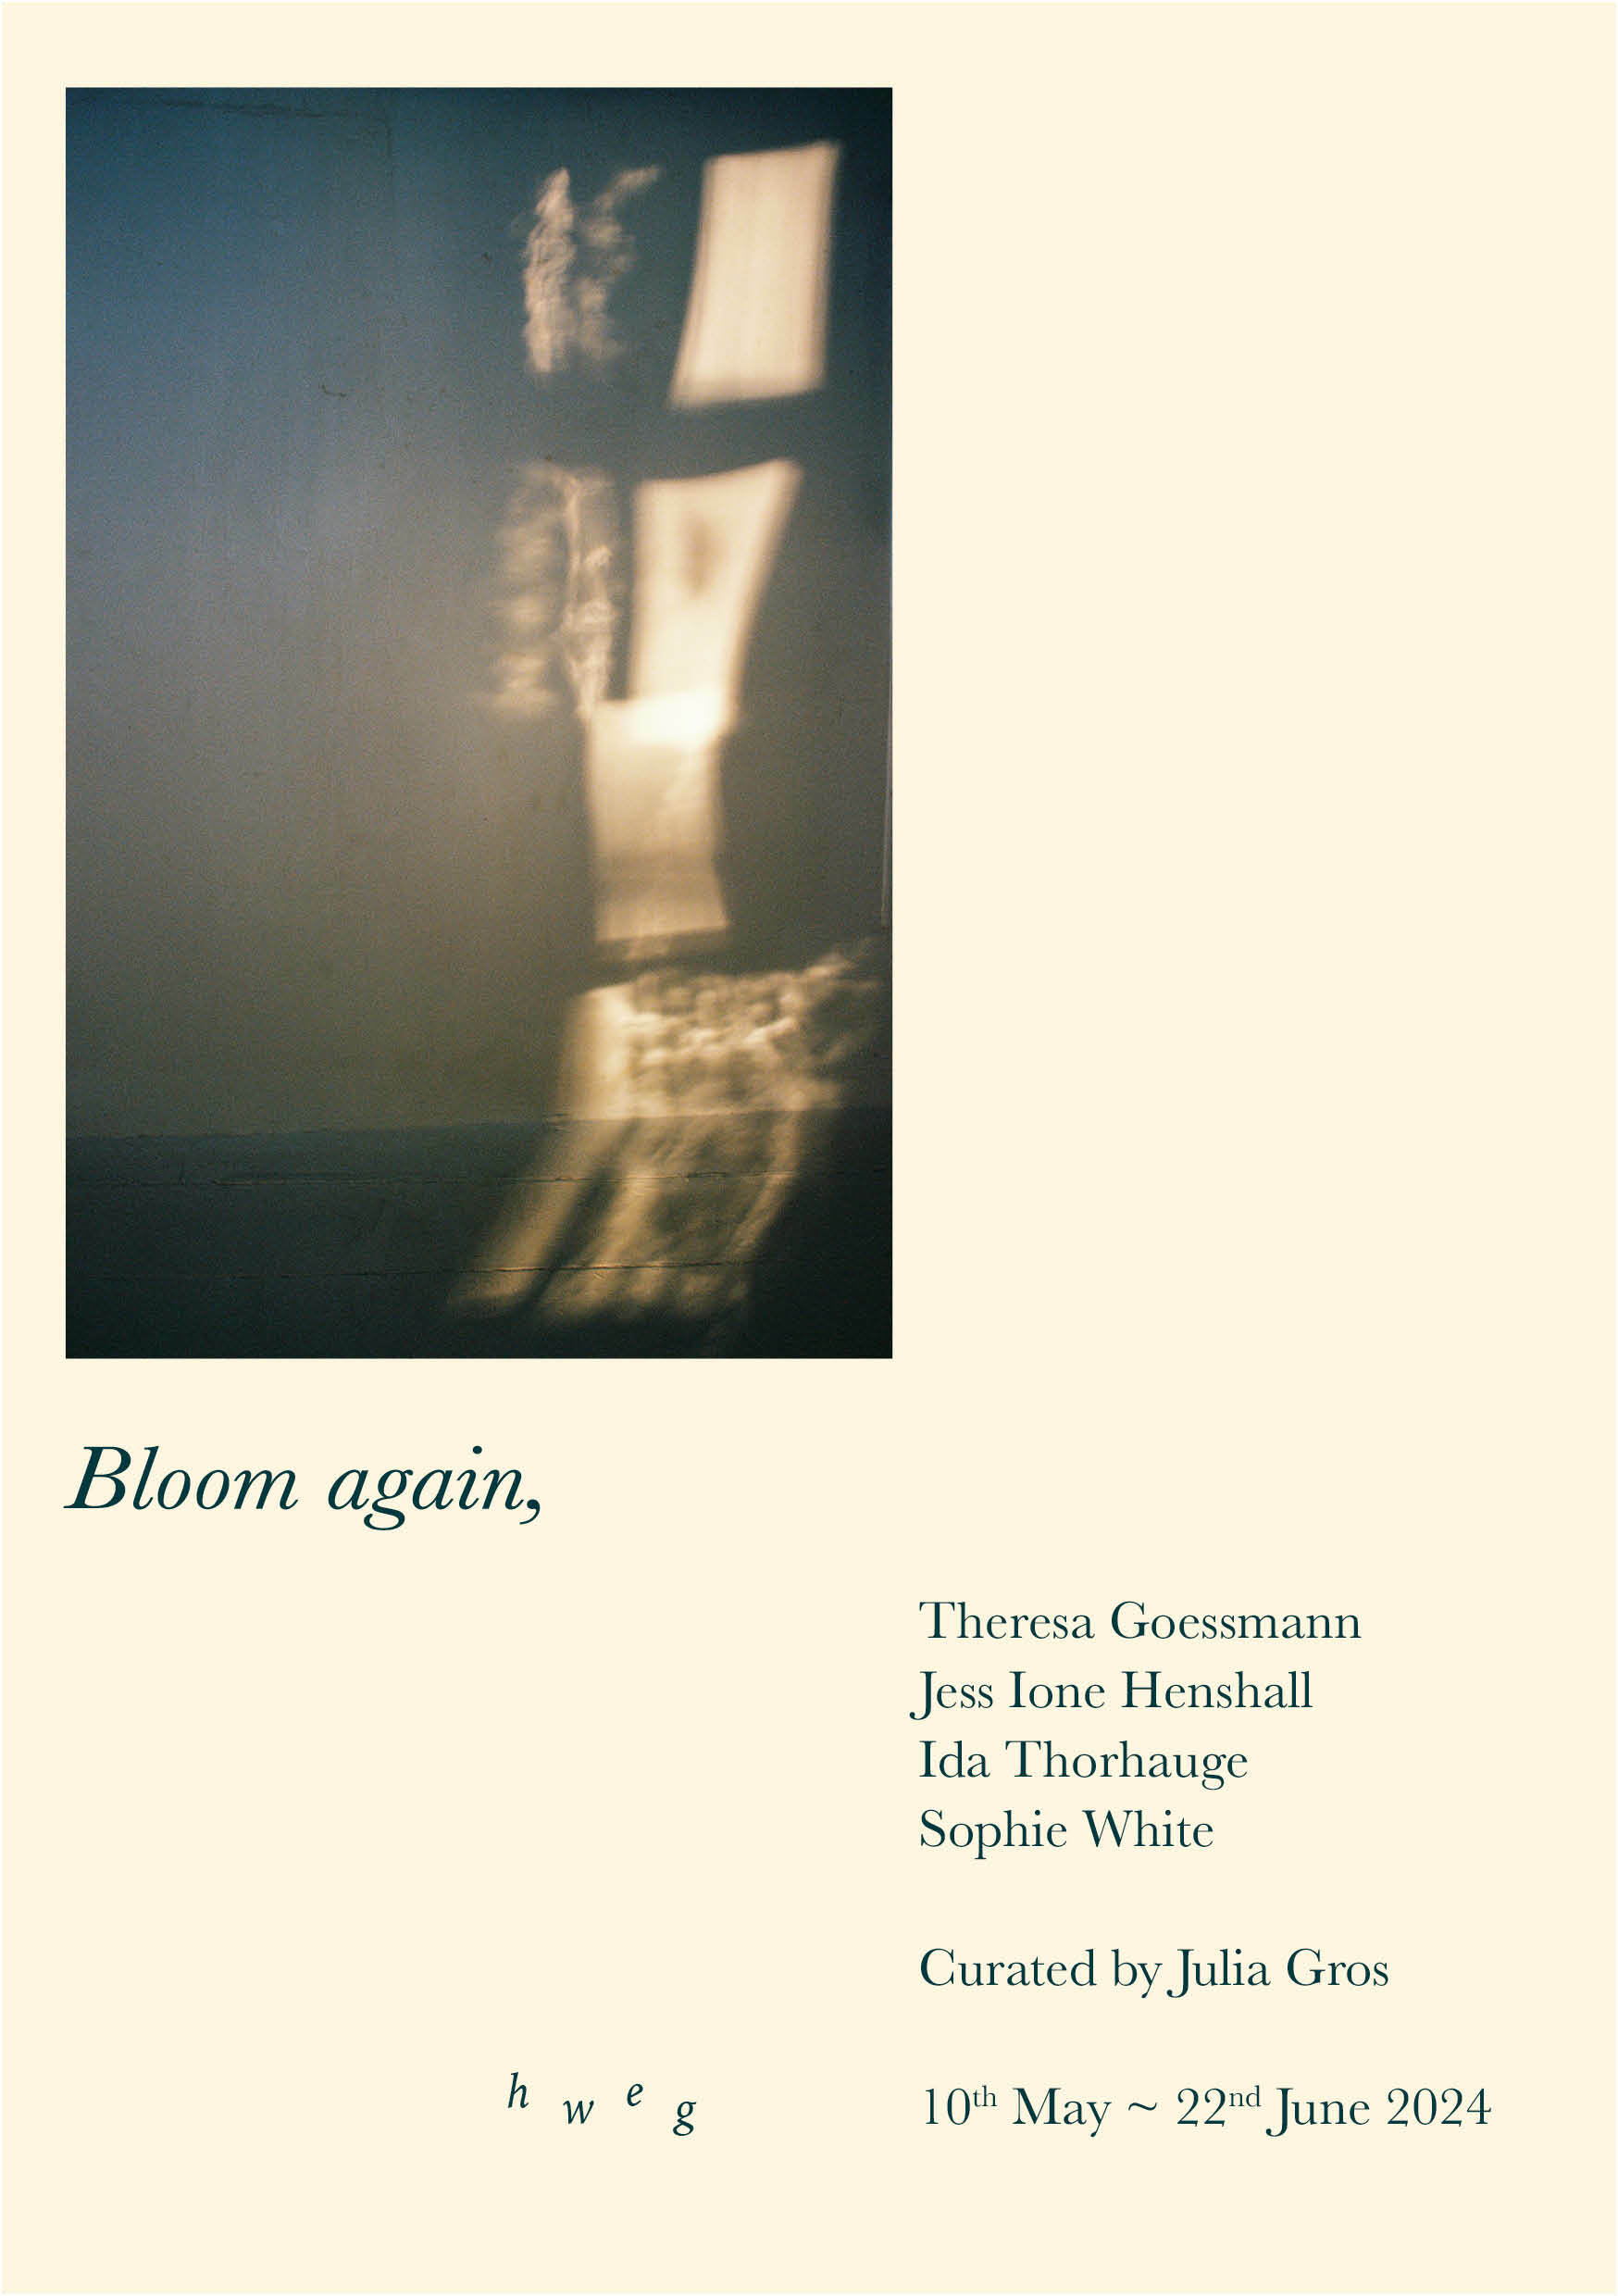 Bloom again poster